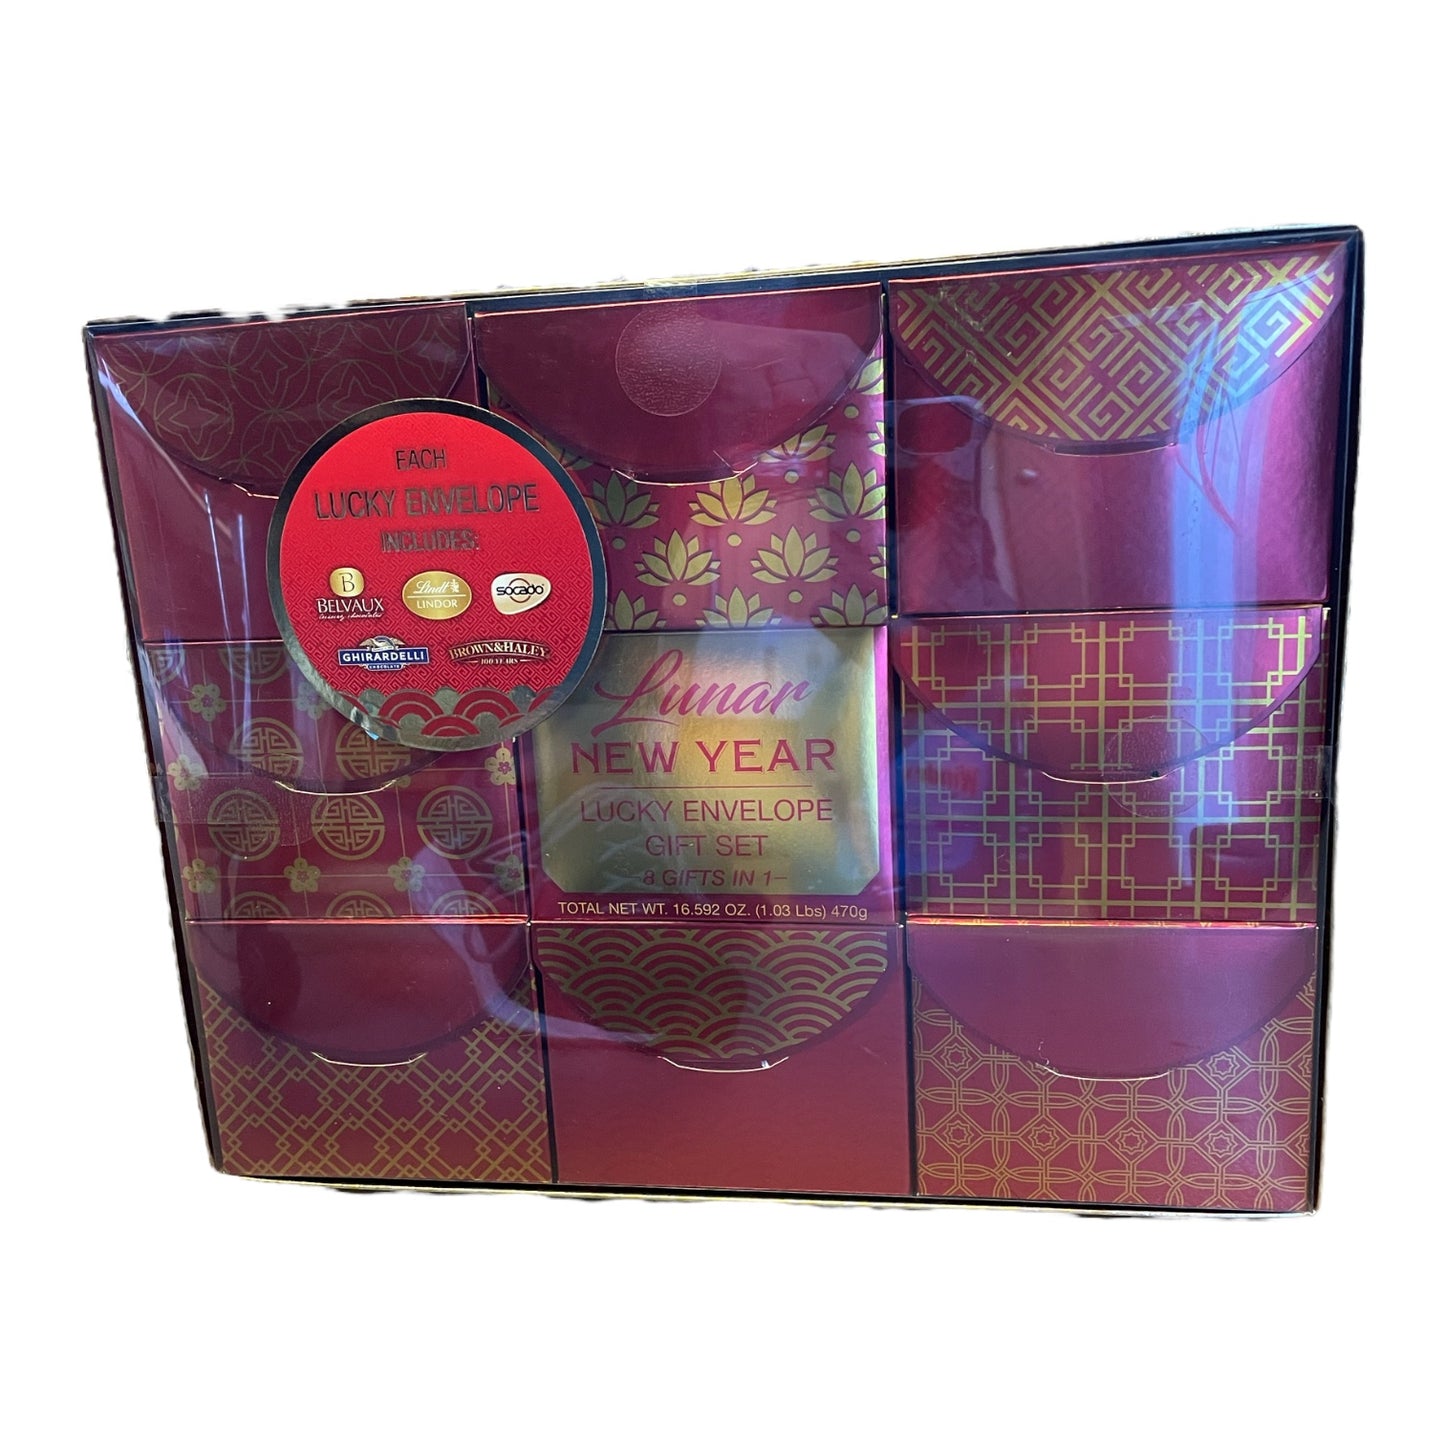 Houdini Lunar New Year Lucky Envelope Gift Set, Expires 03/01/2023